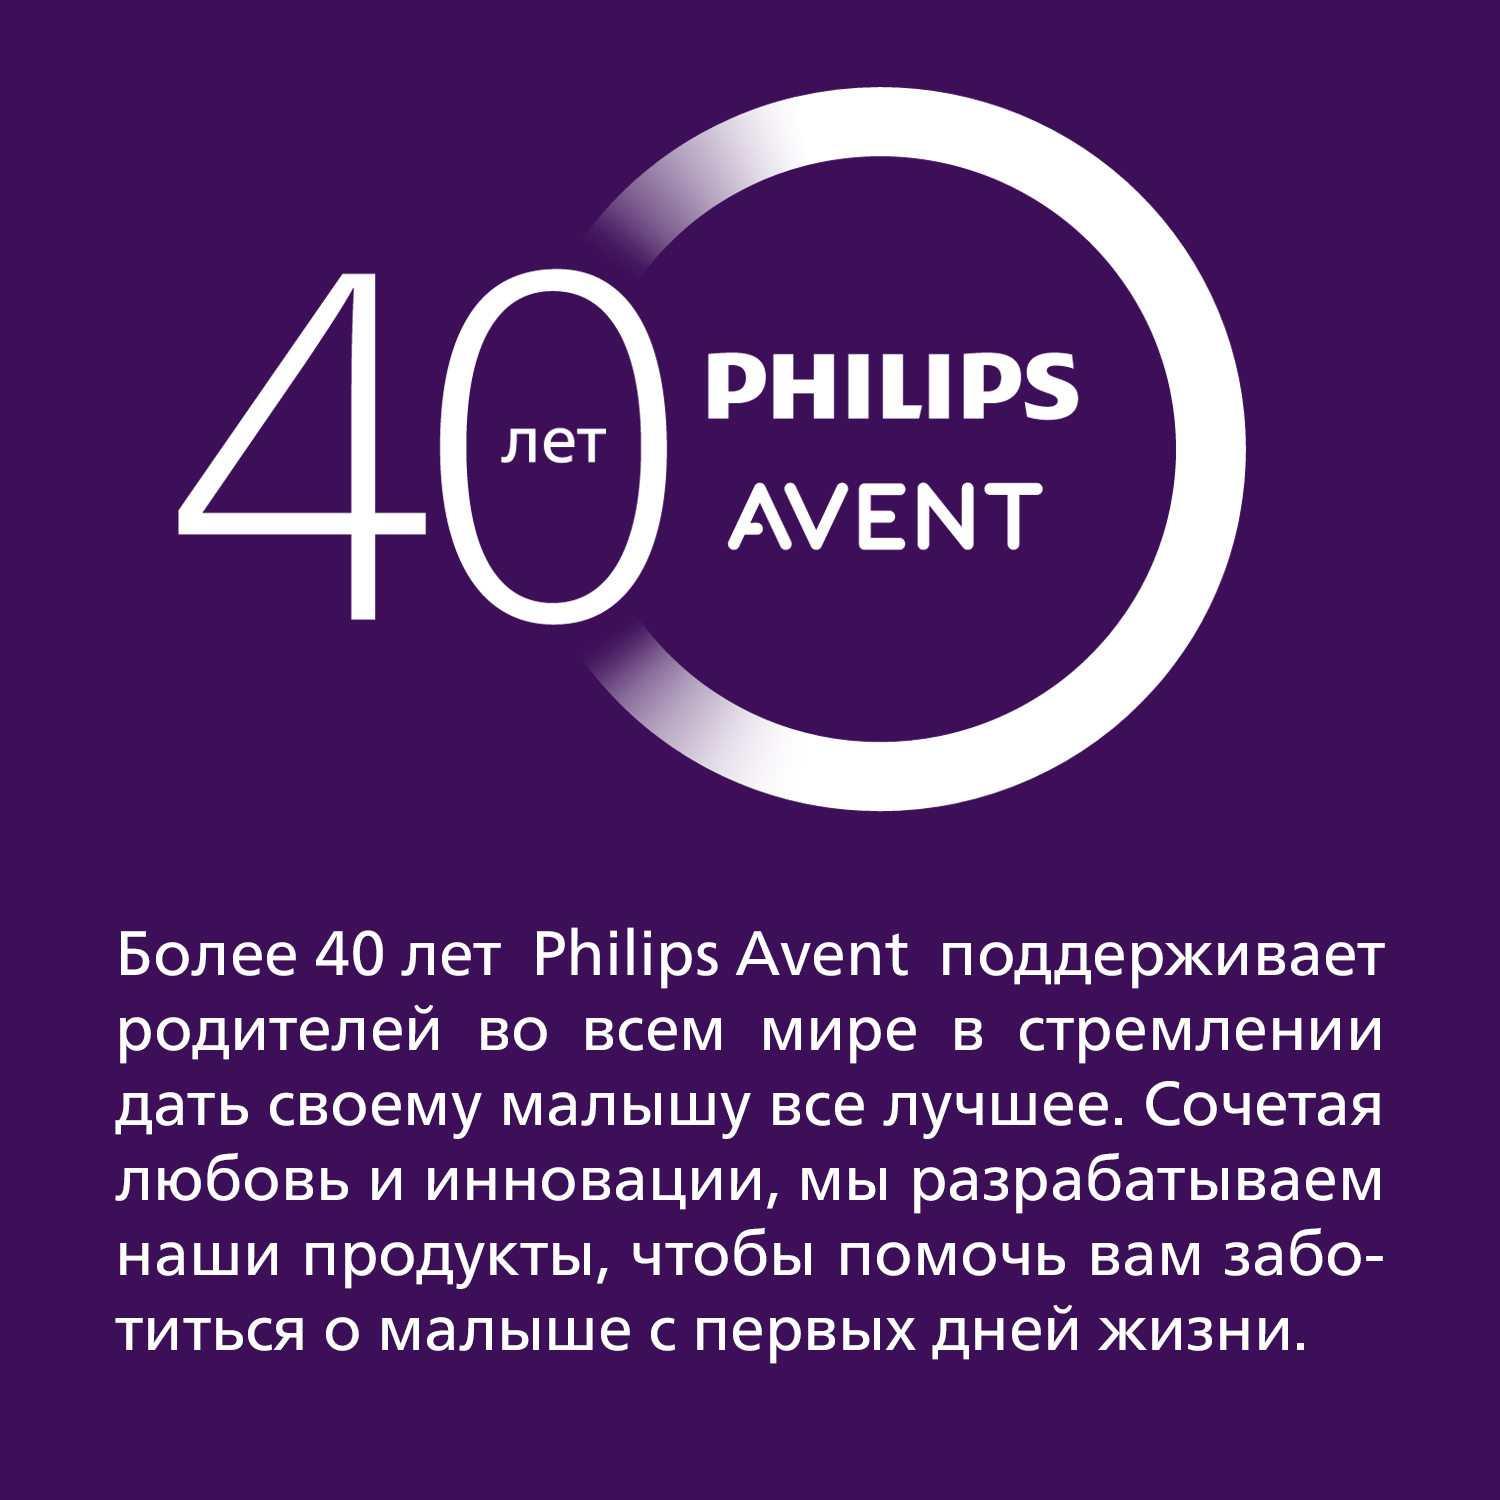 Молокоотсос Philips Avent Comfort ручной SCF430/10 - фото 2